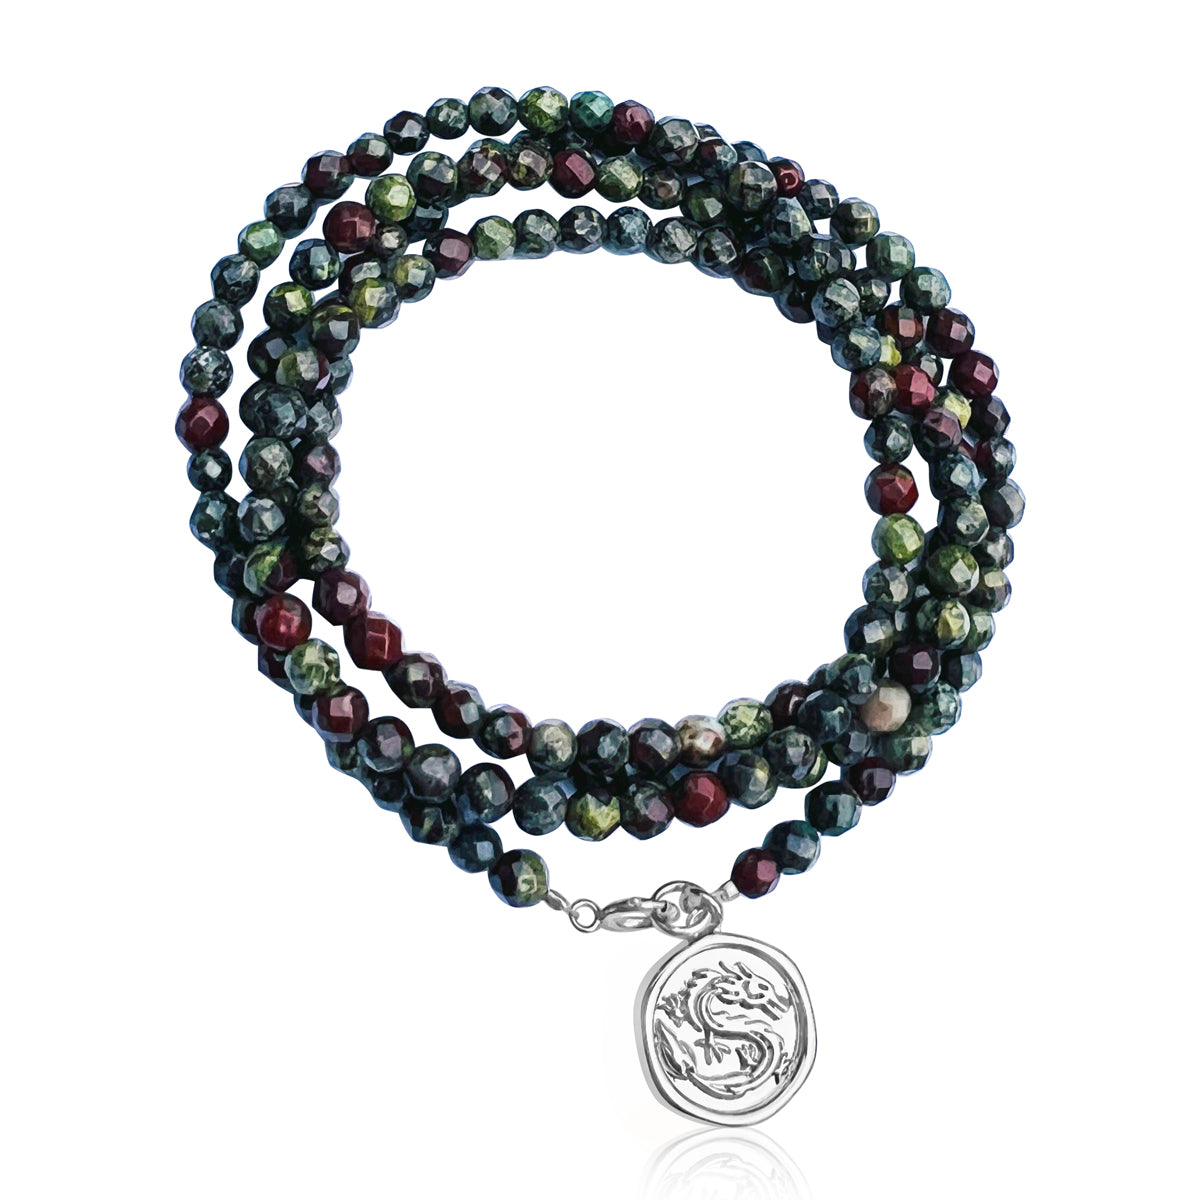 Black dragon bracelet for wealth attraction - LovenHeal